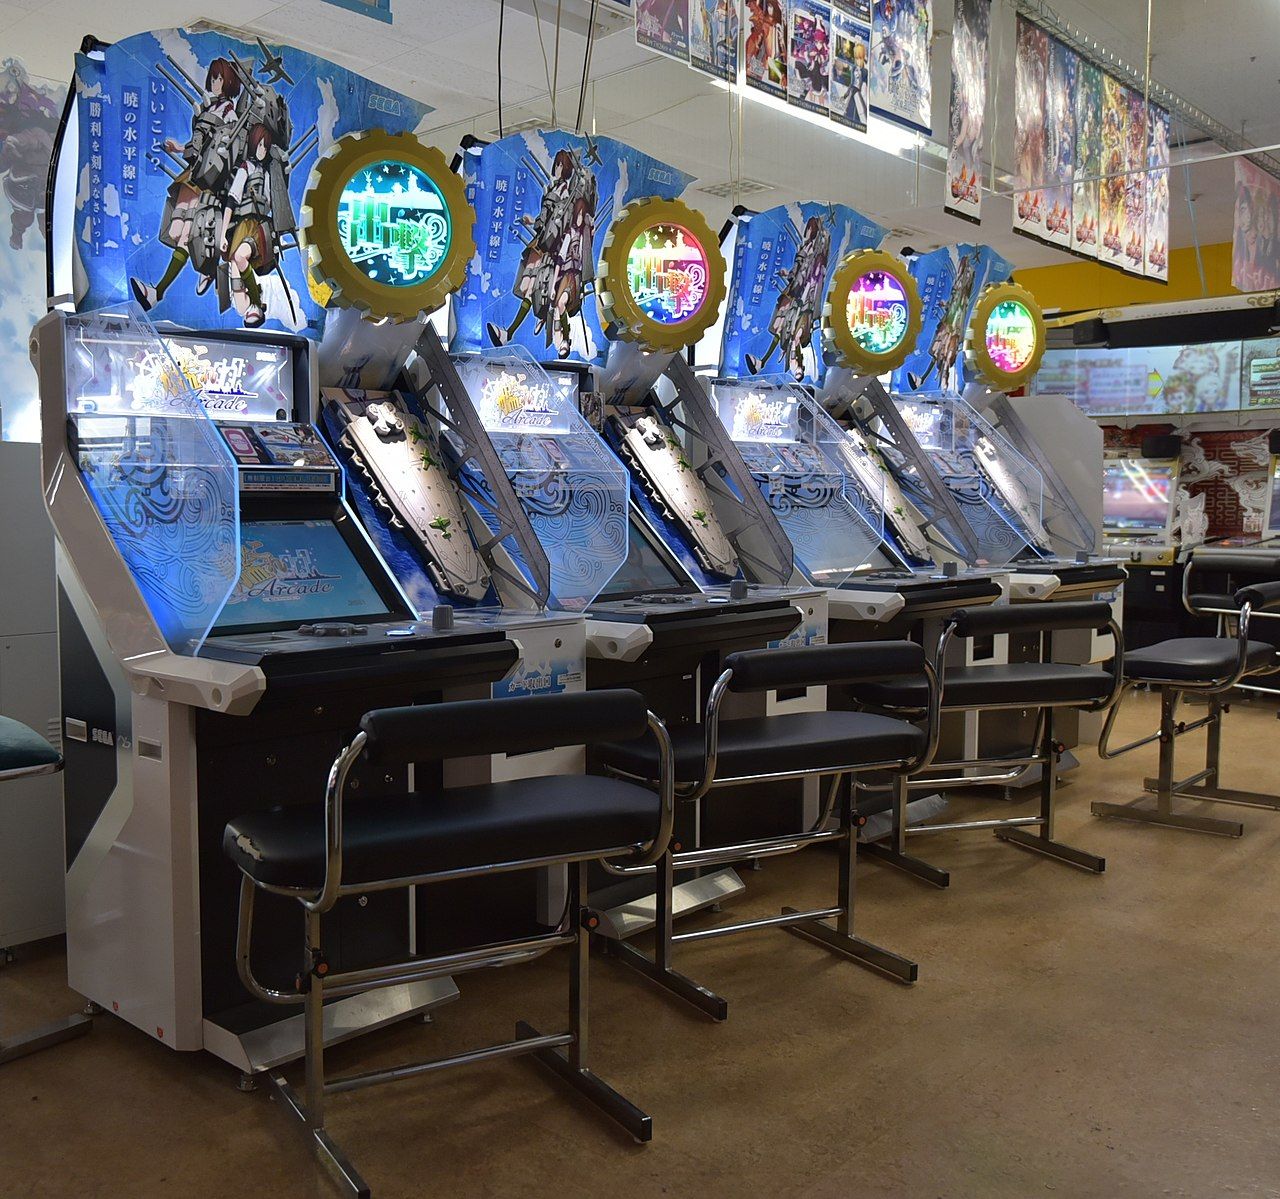 Arcade machines in game shop